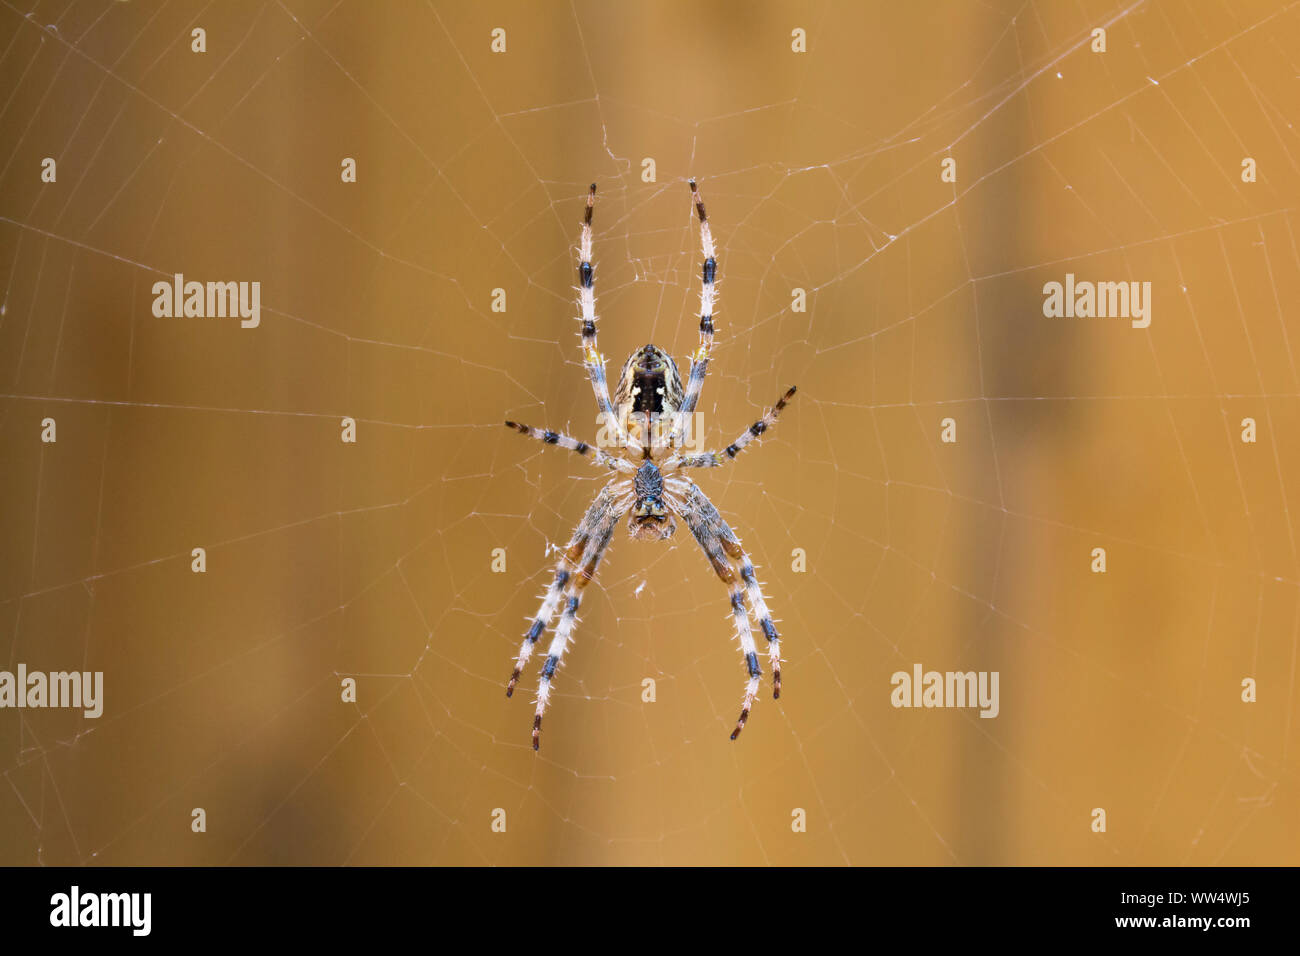 Garden spider on web (Araneus diadematus) large abdomen eight striped legs light brown with dark and light markings white cross on back shown below. Stock Photo